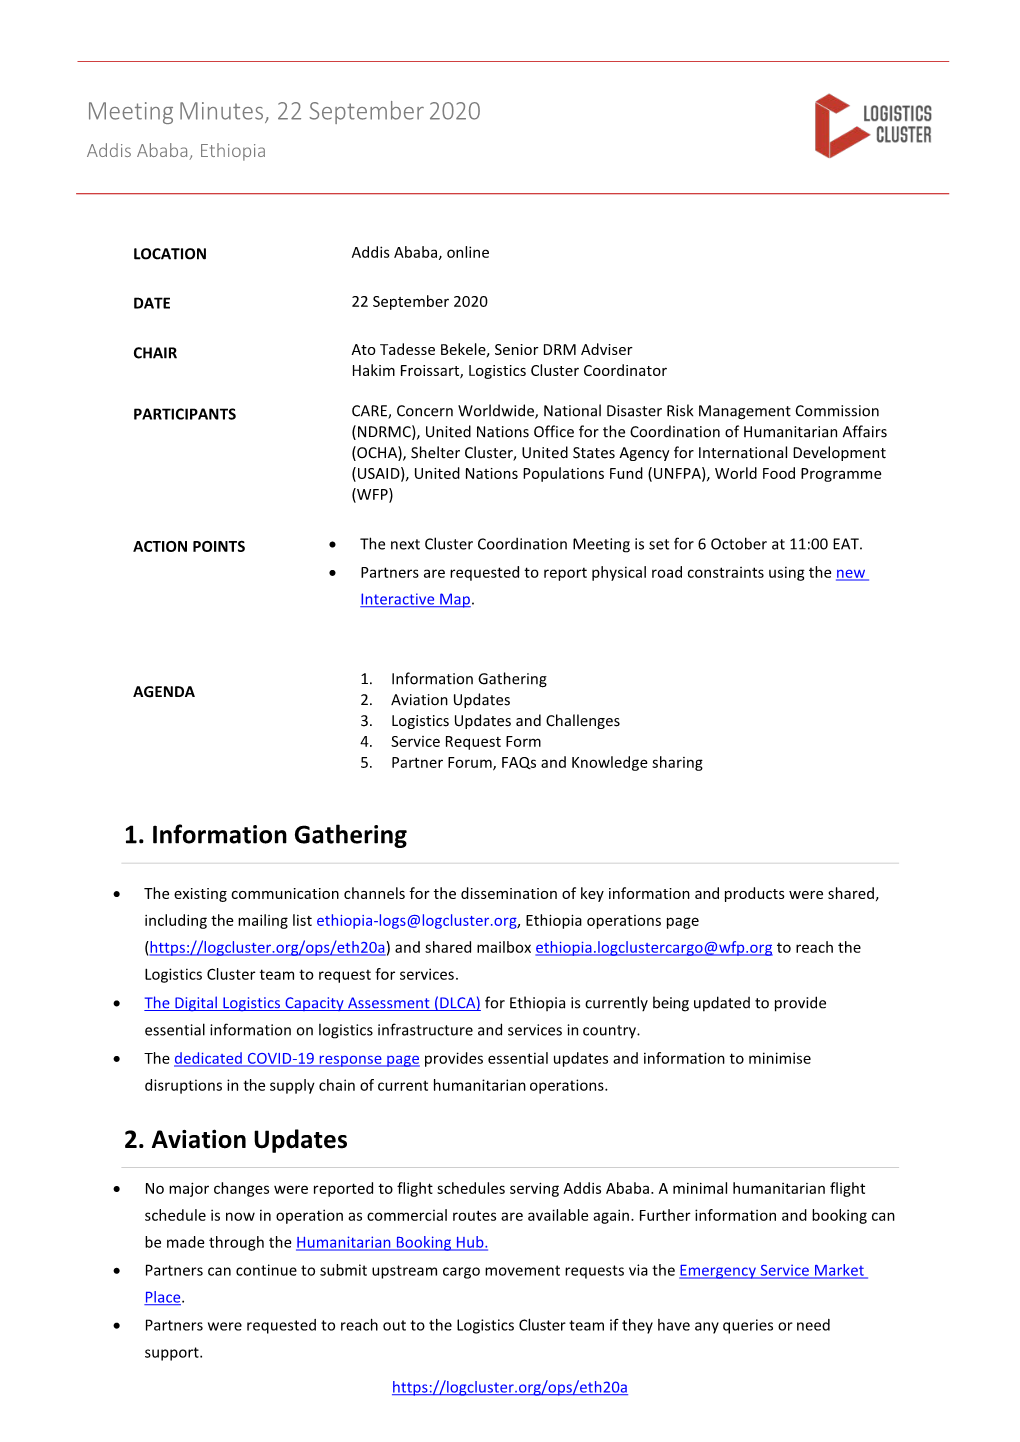 Meeting Minutes, 22 September 2020 1. Information Gathering 2. Aviation